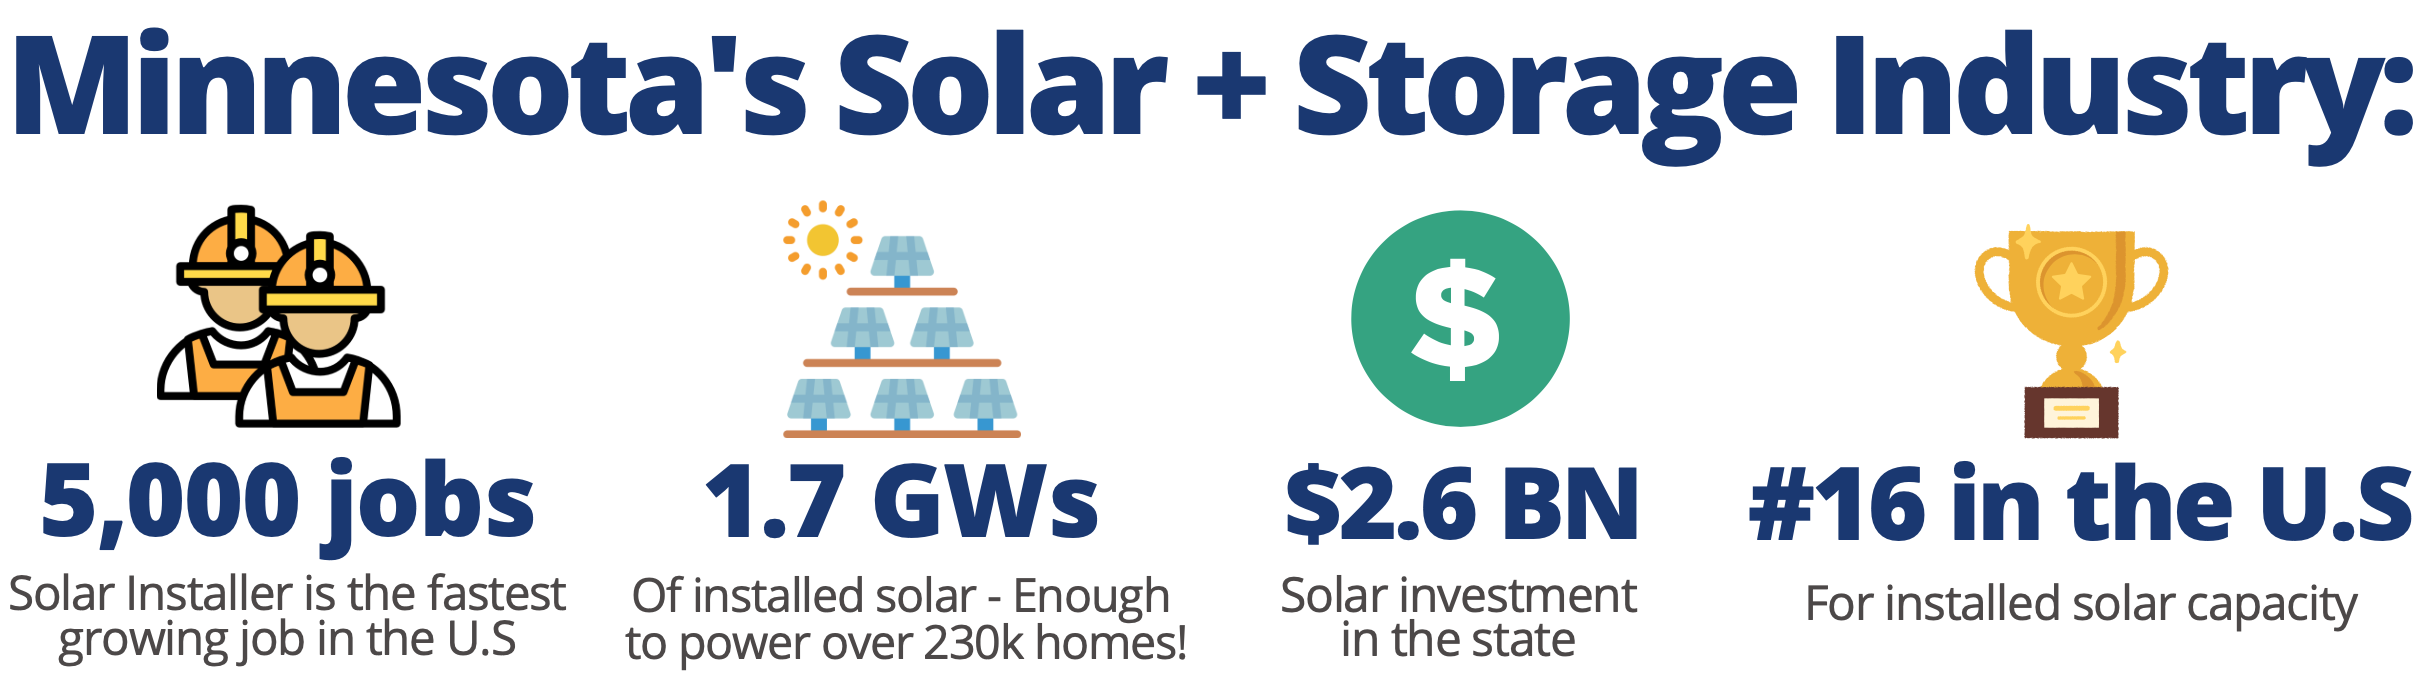 Minnesota solar industry fast facts MnSEIA